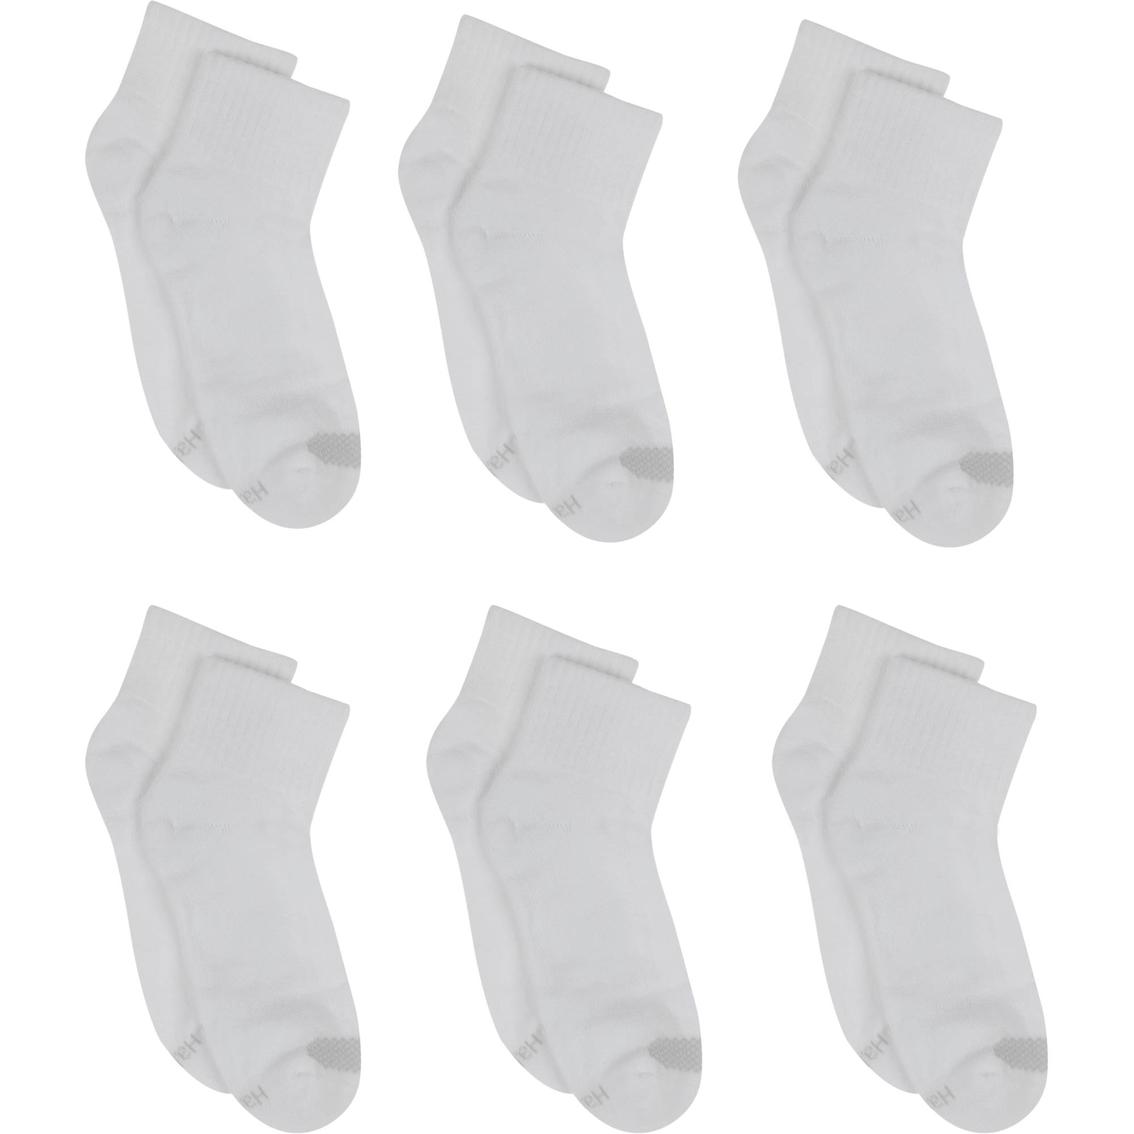 Hanes Red Label Women's Ankle Socks, 6 Pk. | Hosiery & Socks | Clothing ...